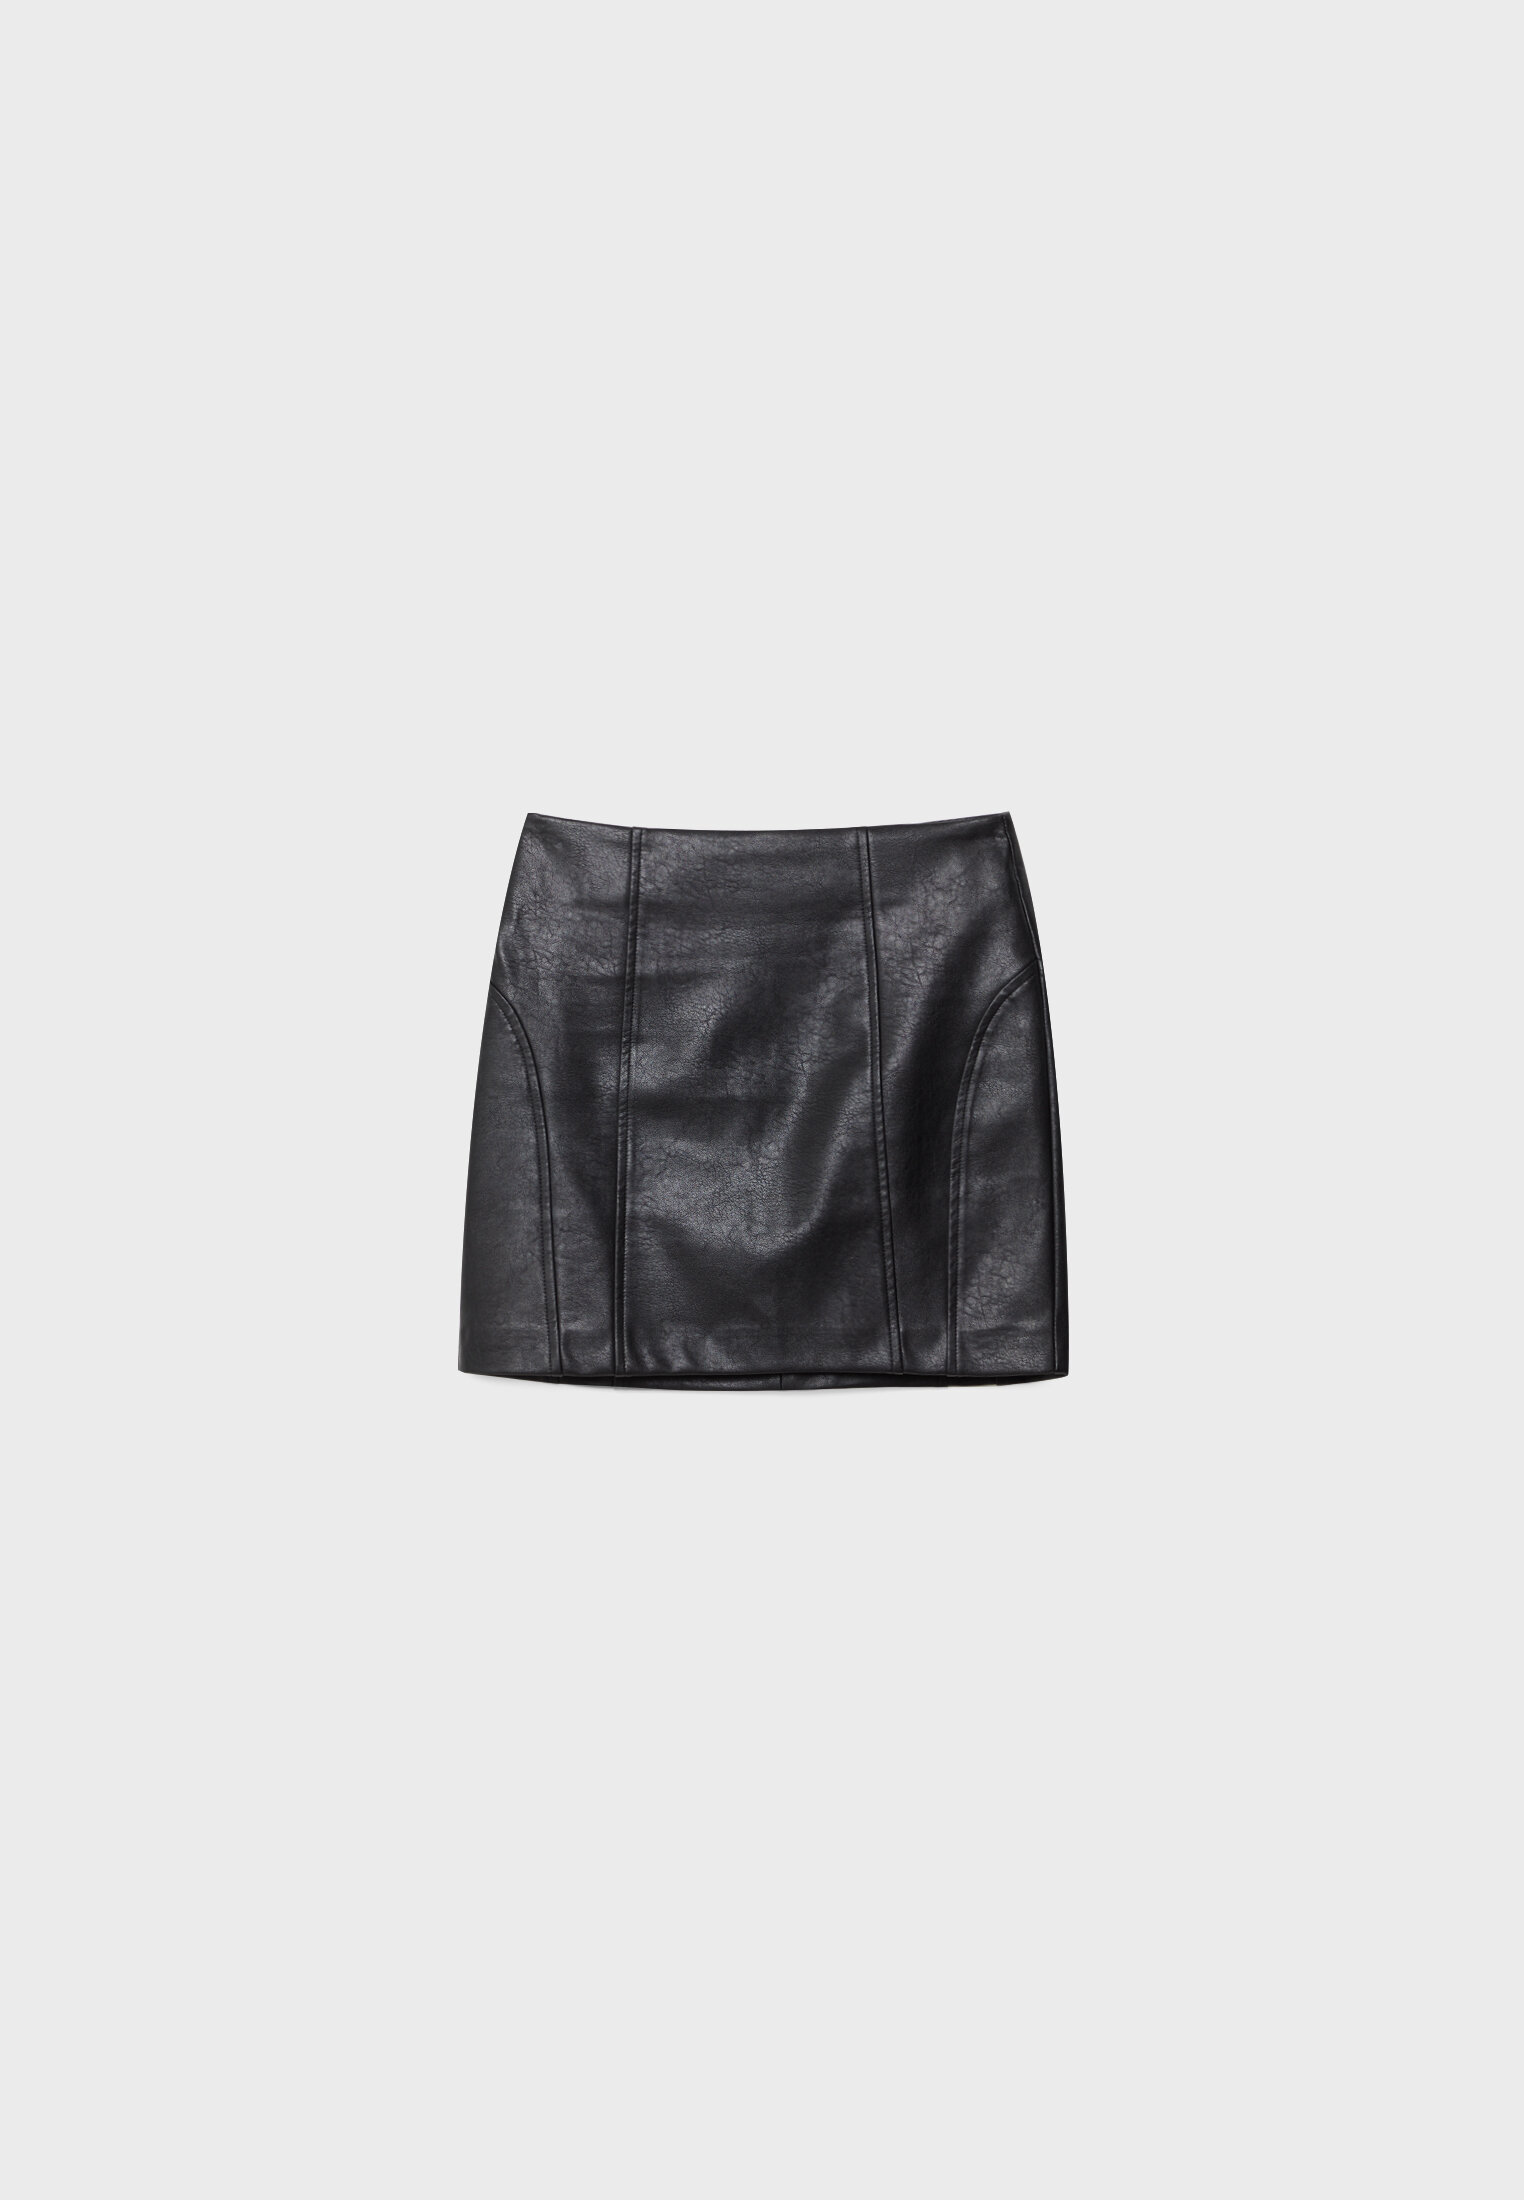 Faux leather mini skirt - Women's fashion | Stradivarius United